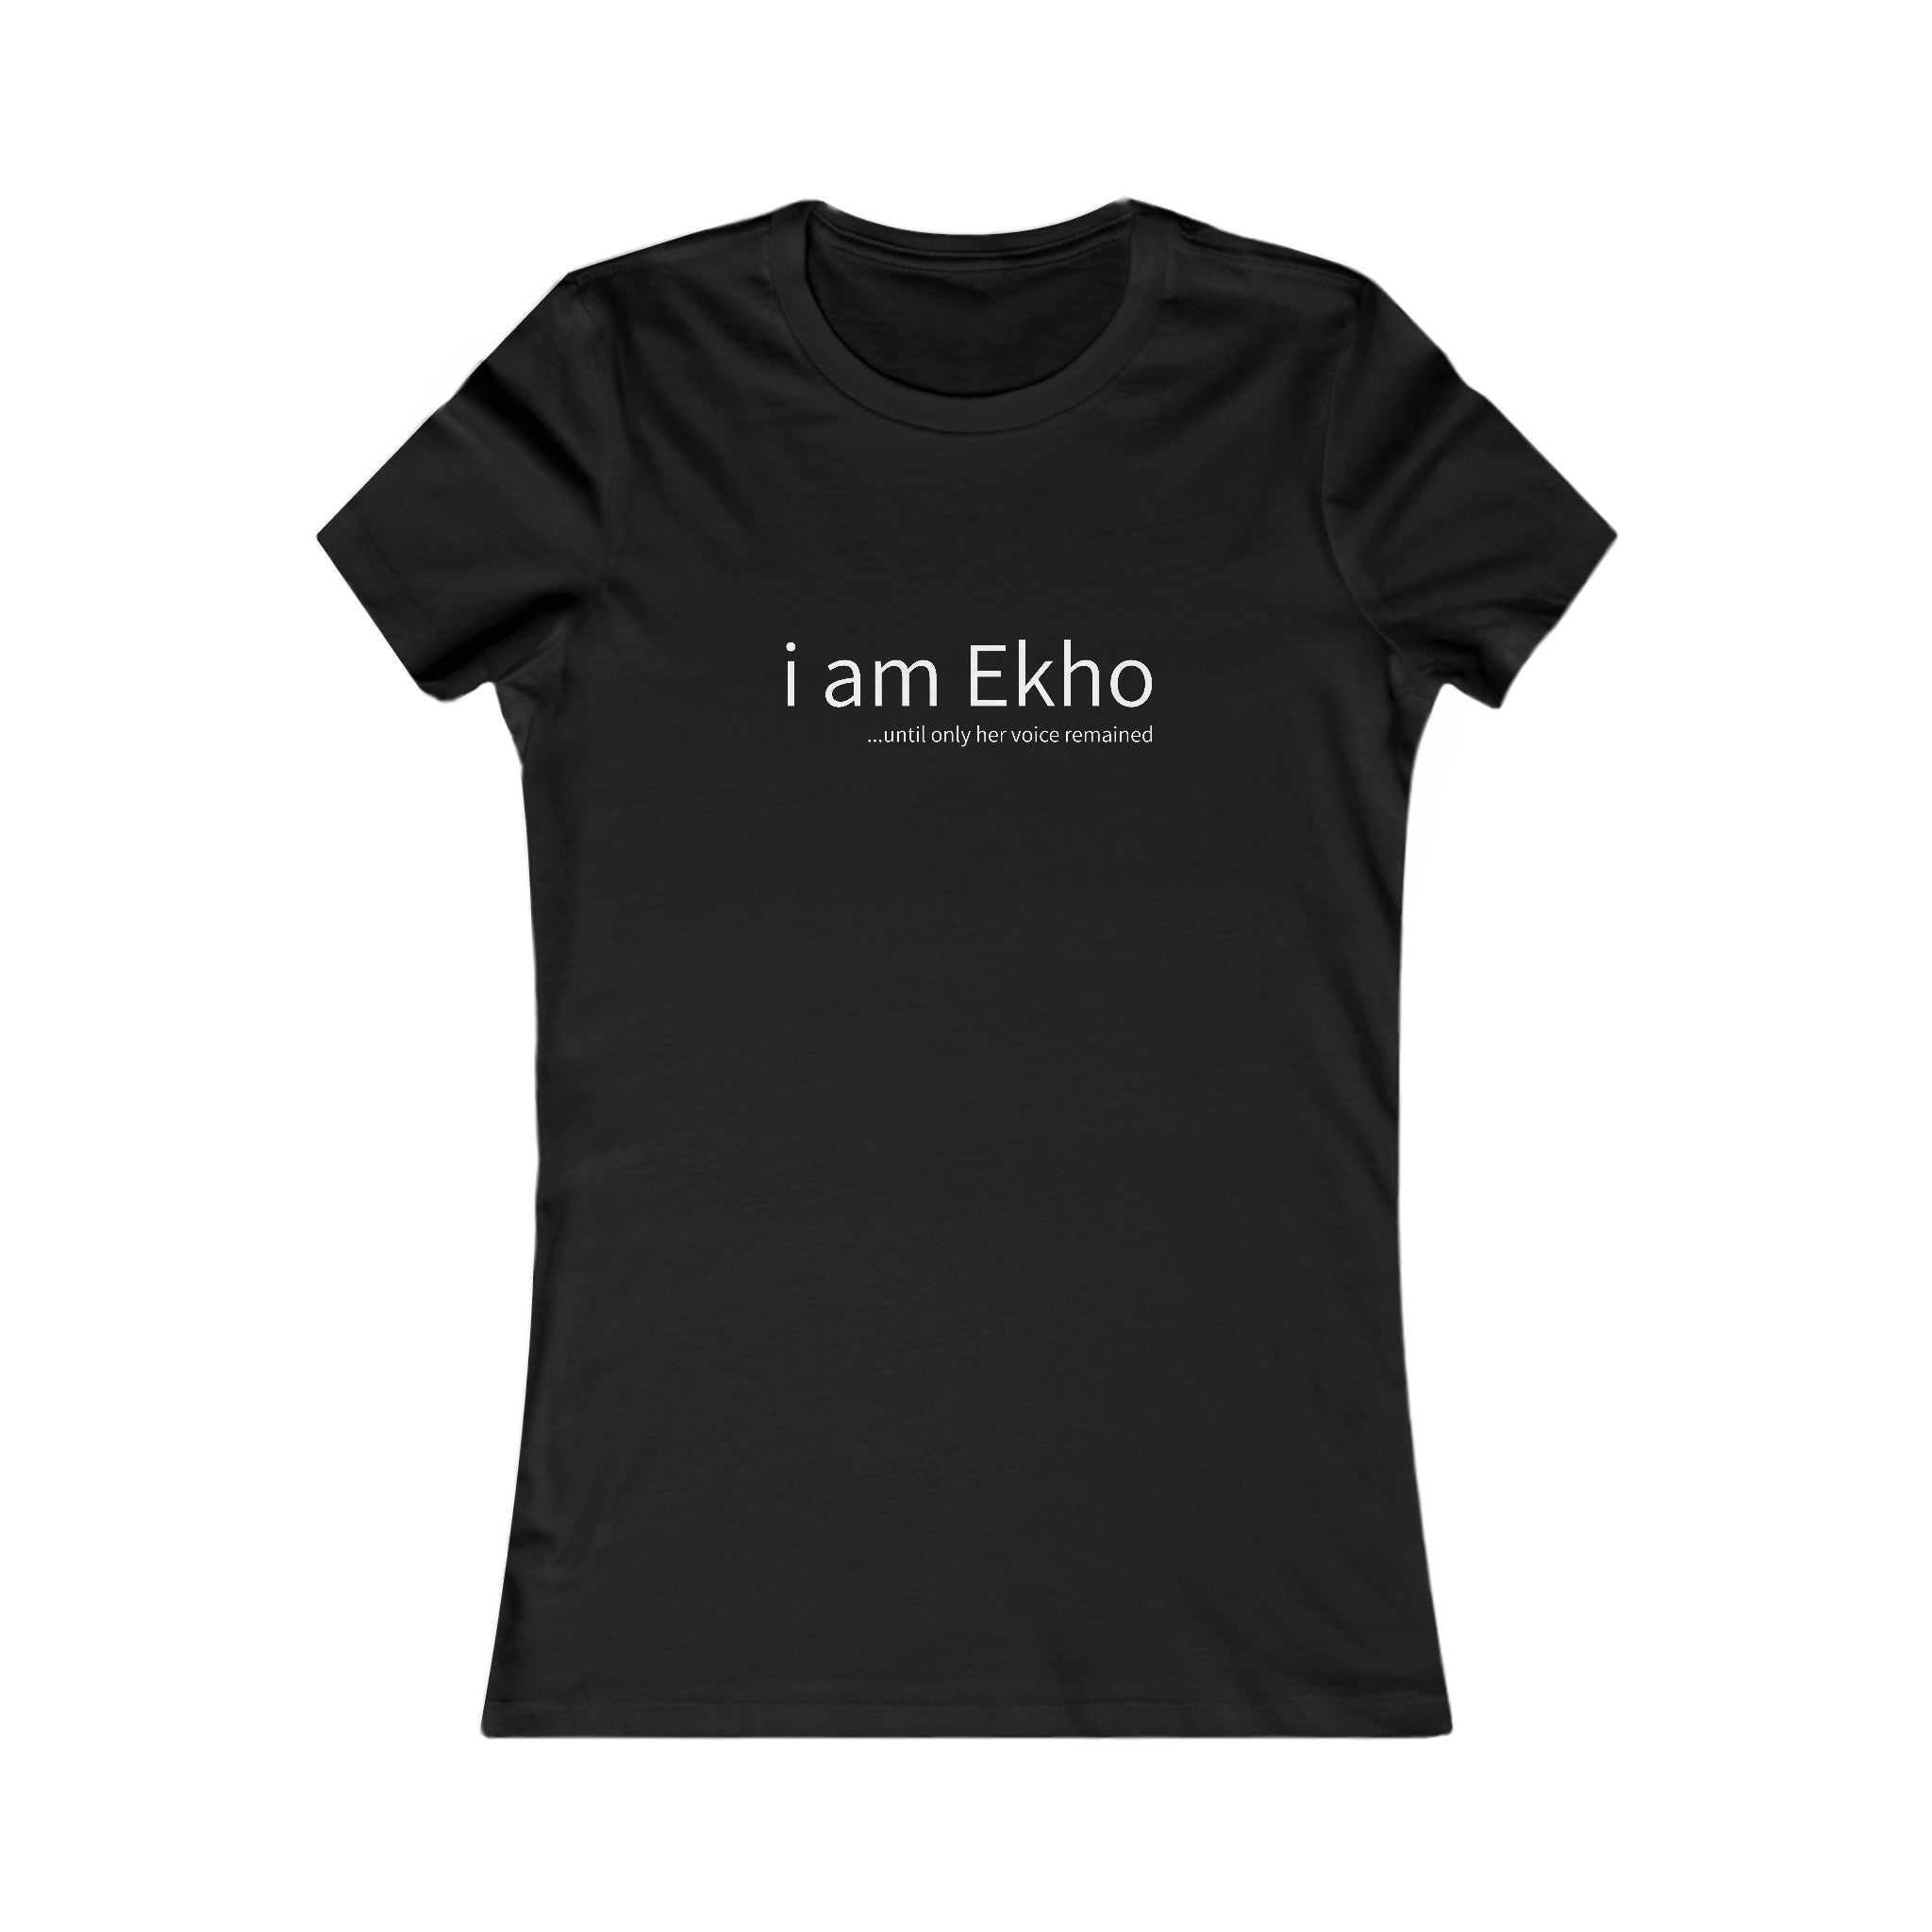 Ekho's favorite t-shirt "i am Ekho" black